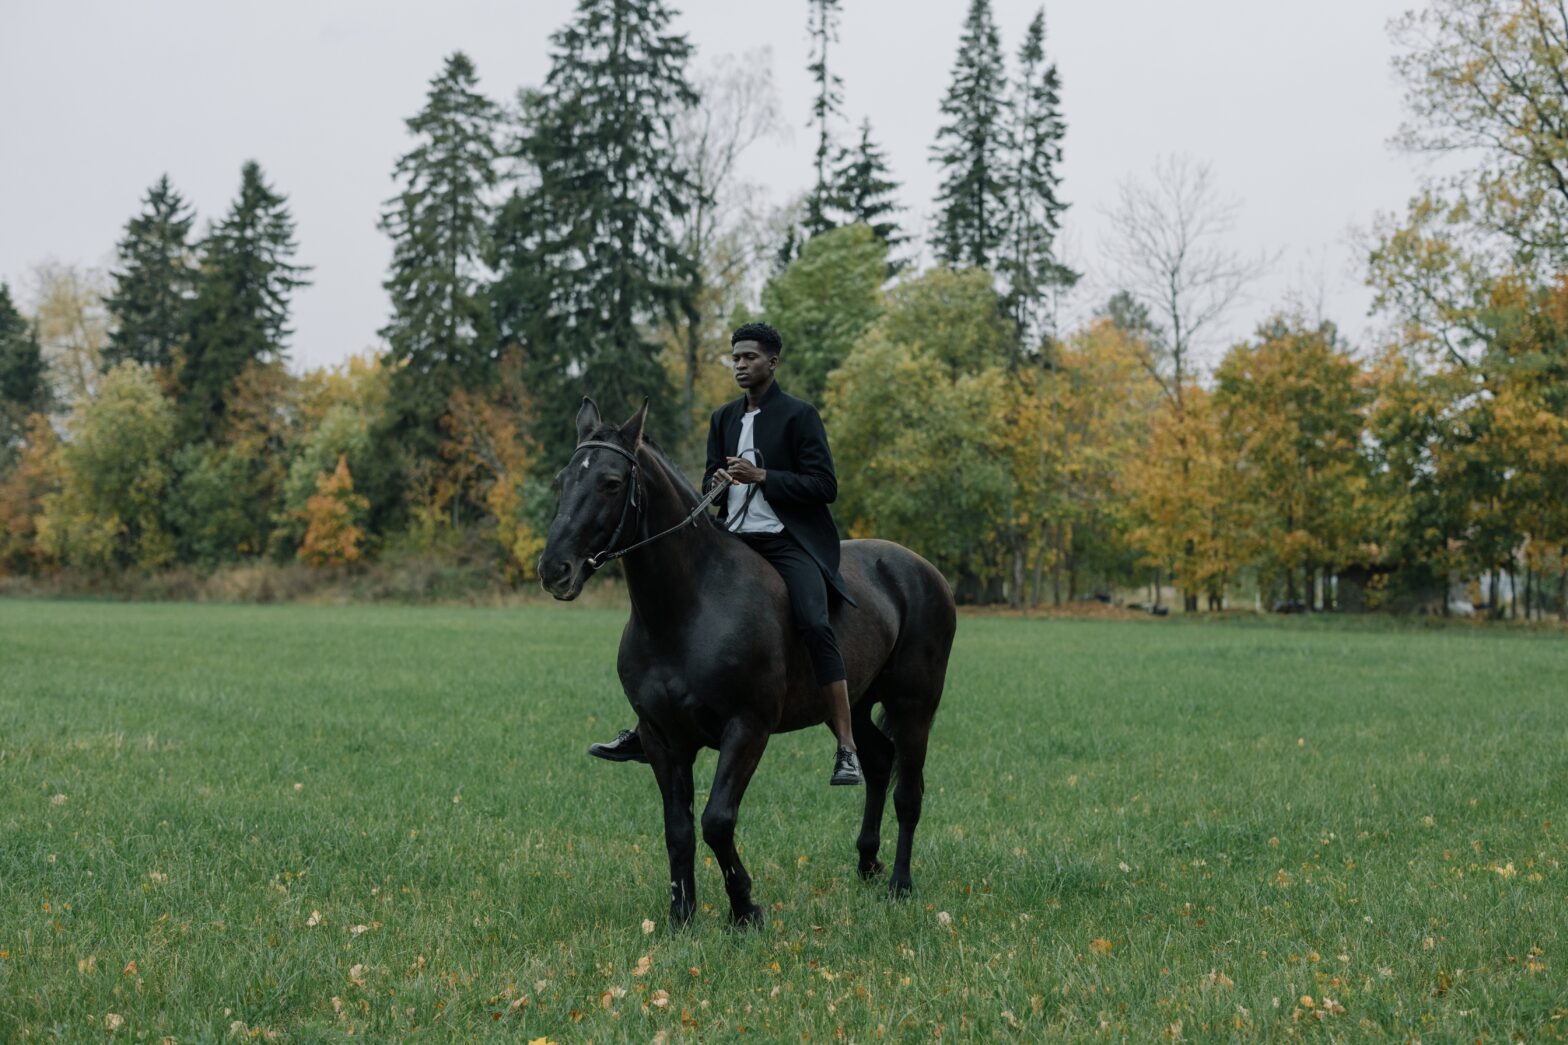 Black man on horse